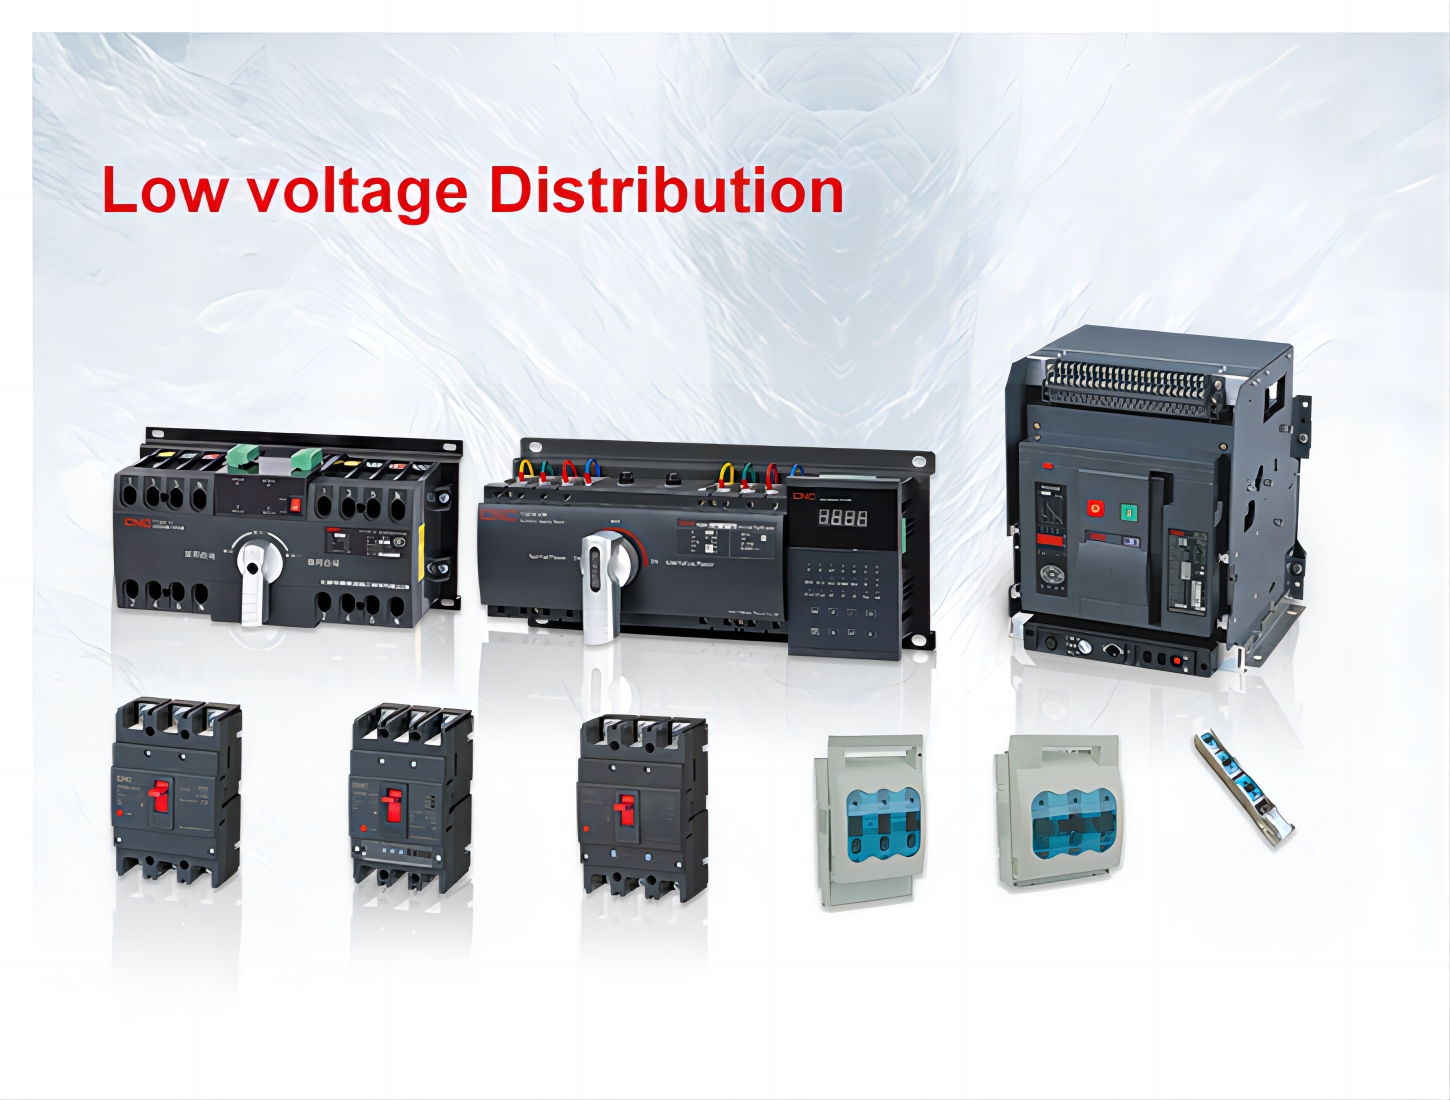 Low voltage Distribution